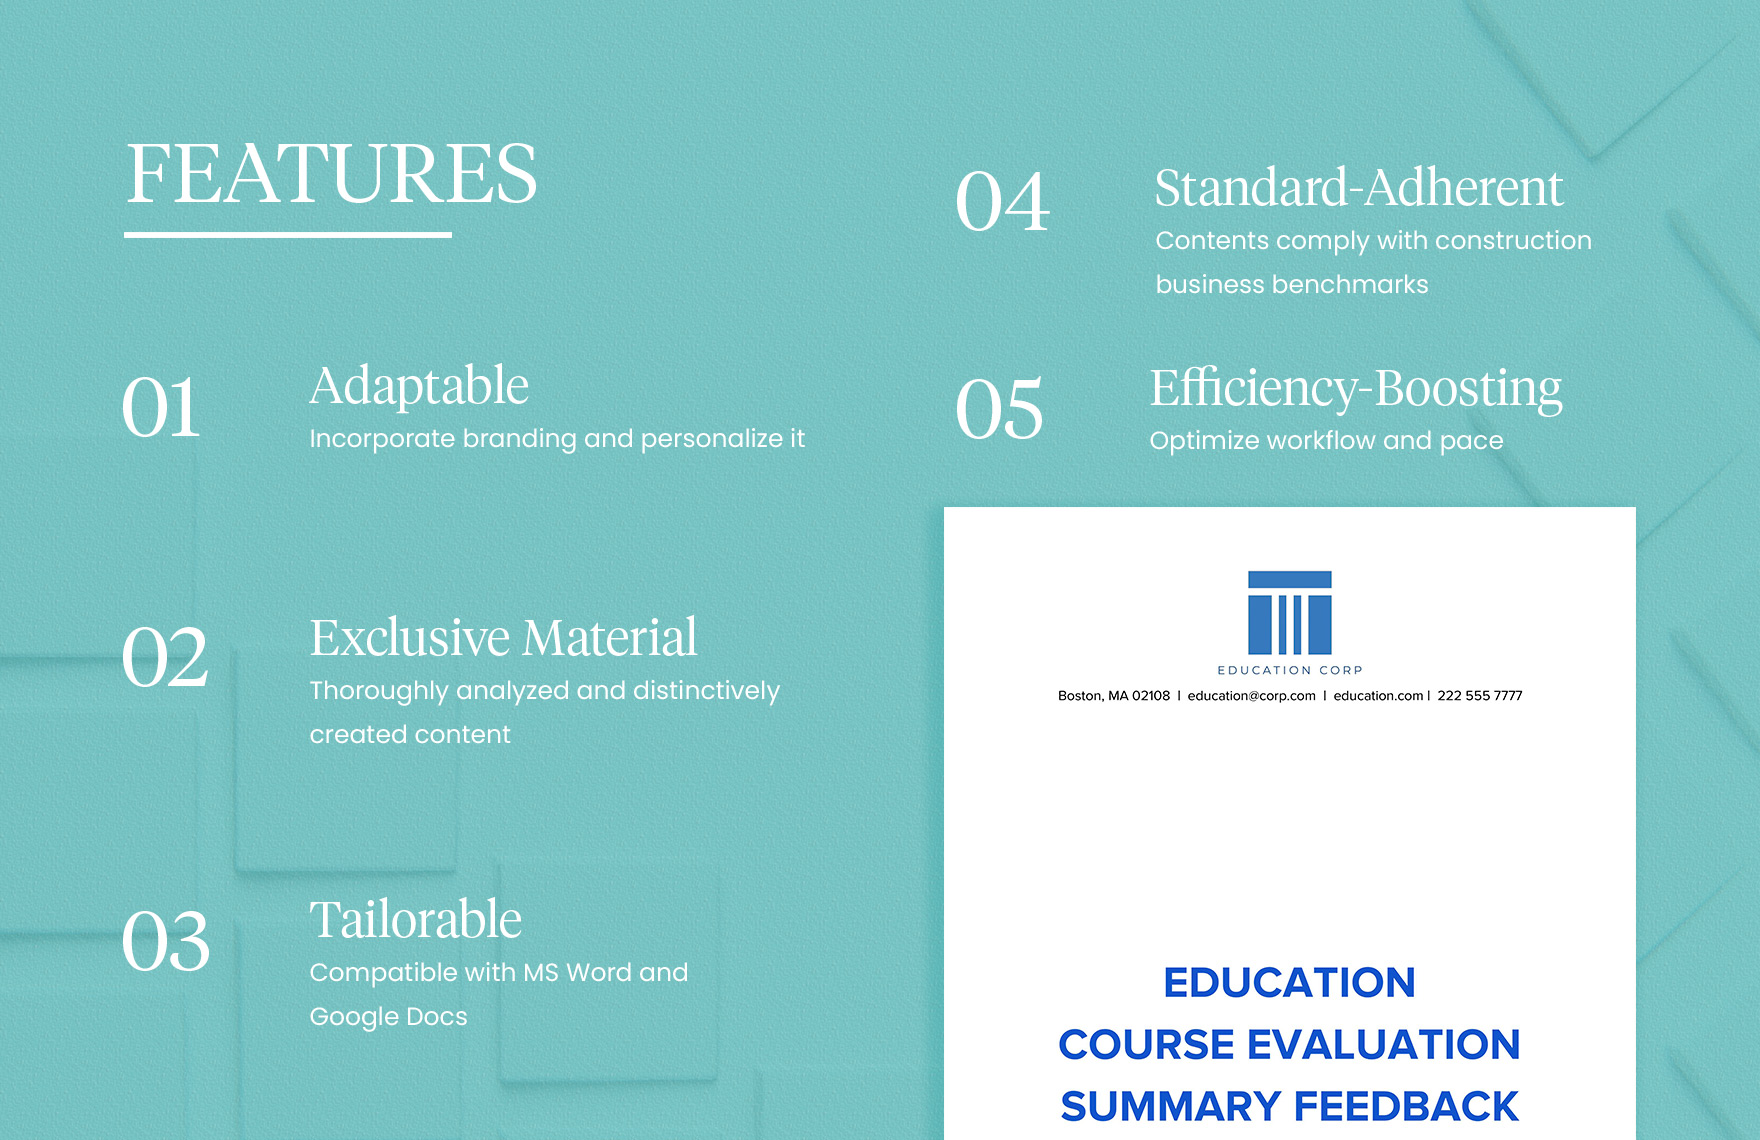 Education Course Evaluation Summary Feedback